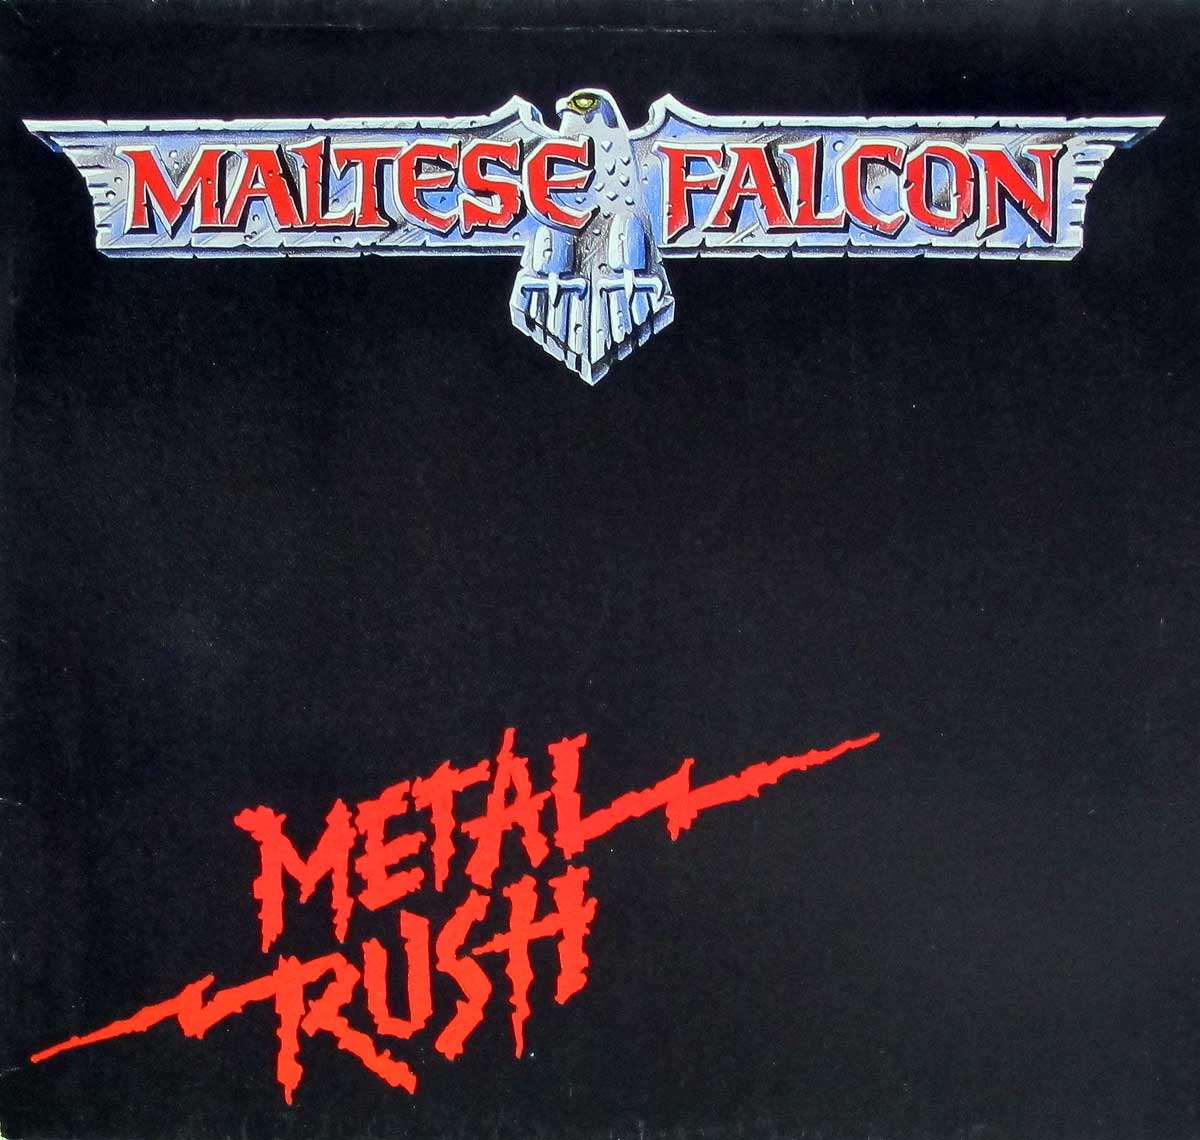 High Resolution Photo Album Front Cover of MALTESE FALCON - Metal Rush https://vinyl-records.nl